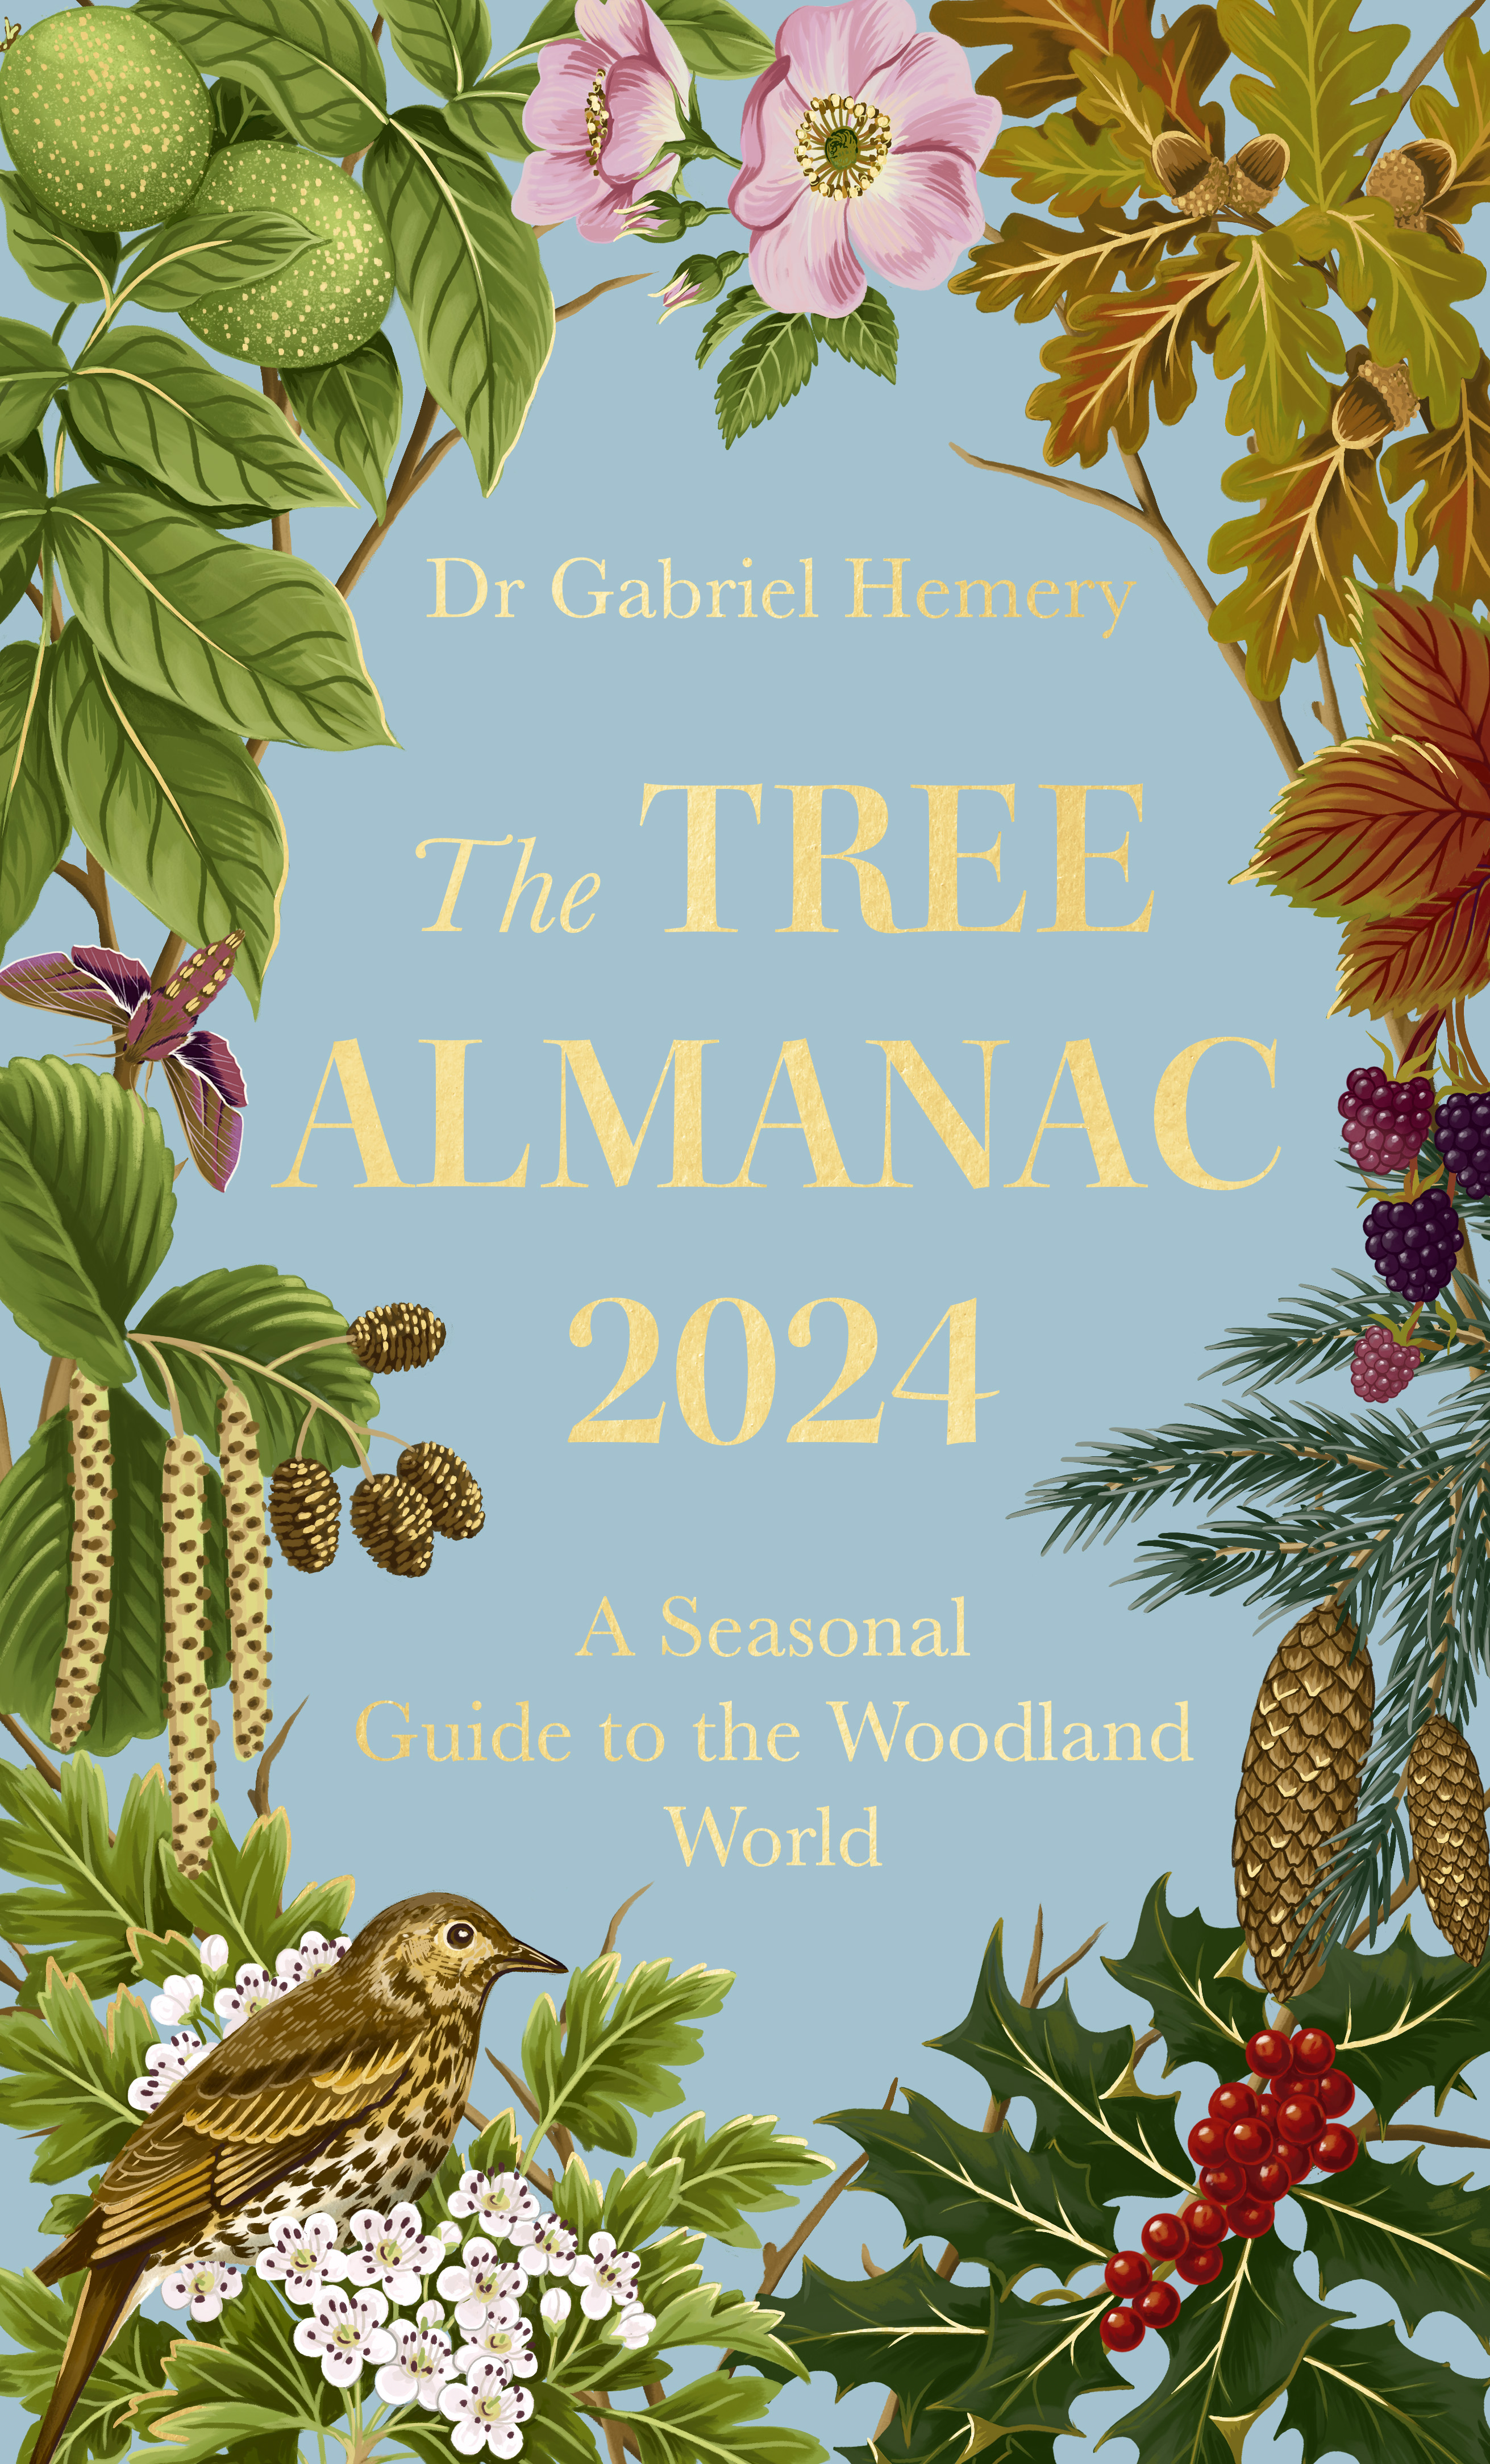 Book jacket of The Tree Almanac 2024 by Dr Gabriel Hemery (Robinson/PA)